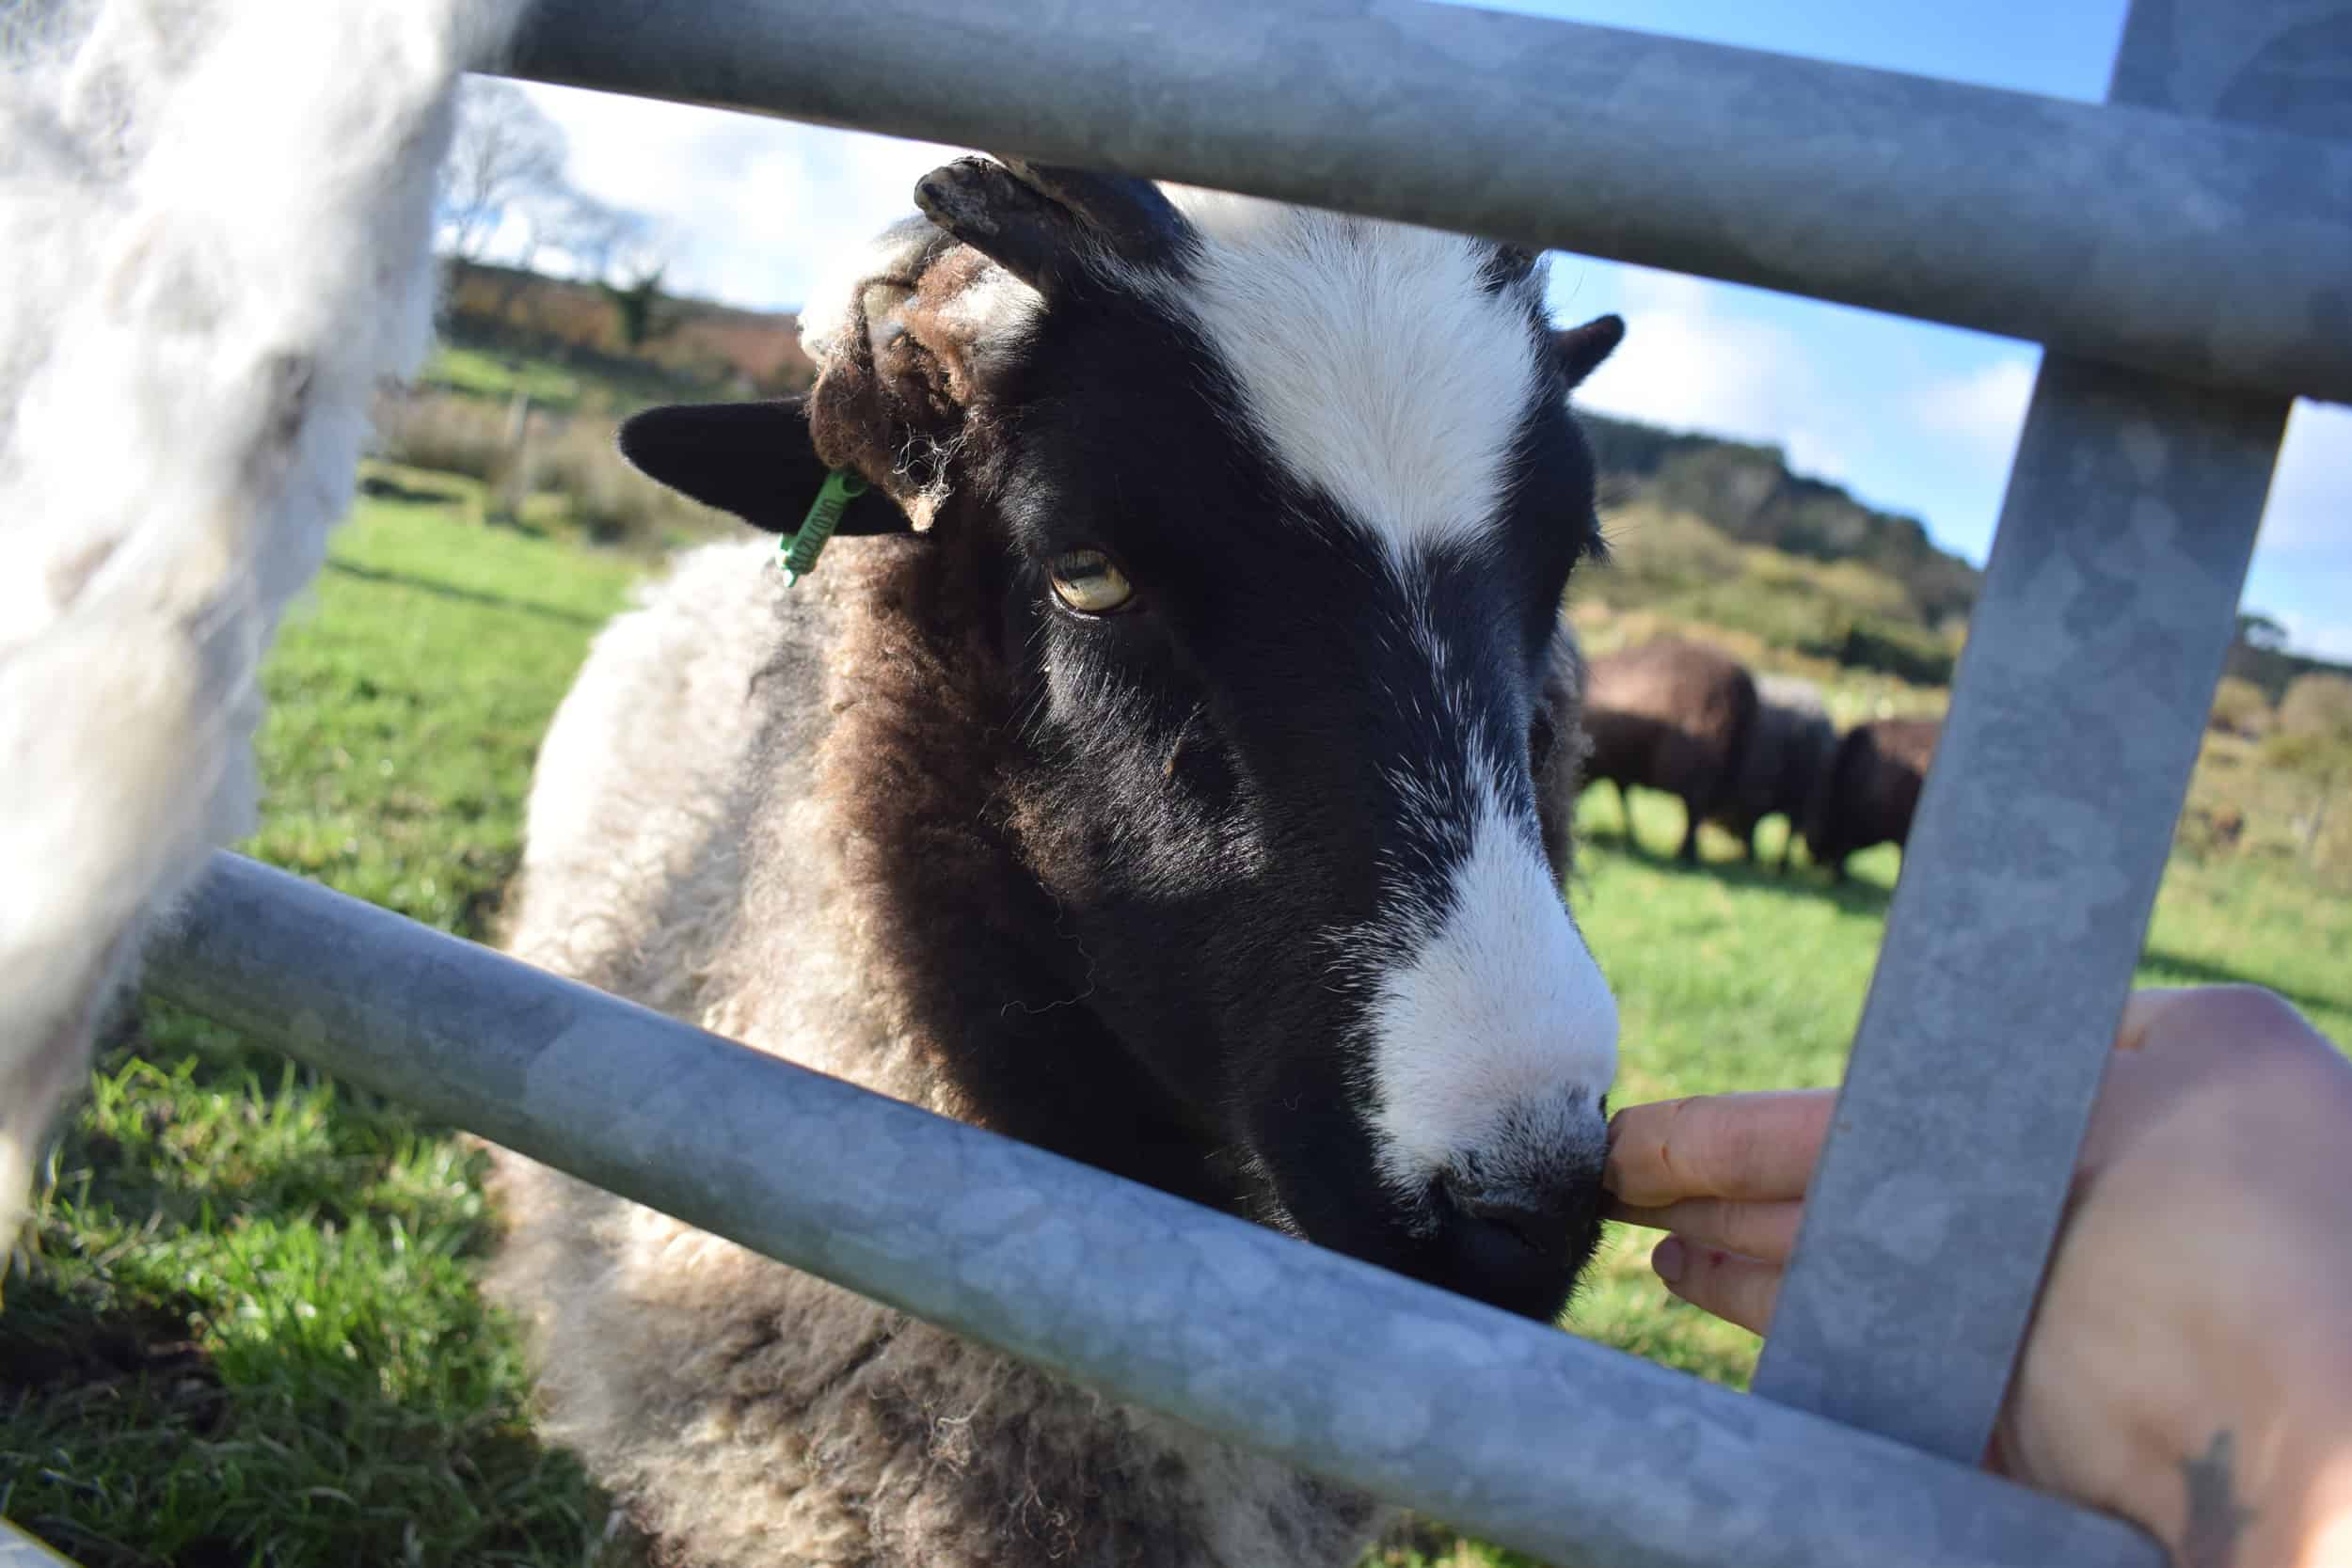 Holly pet lamb sheep jacob cross shetland spotted black grey white wales gwynedd british wool